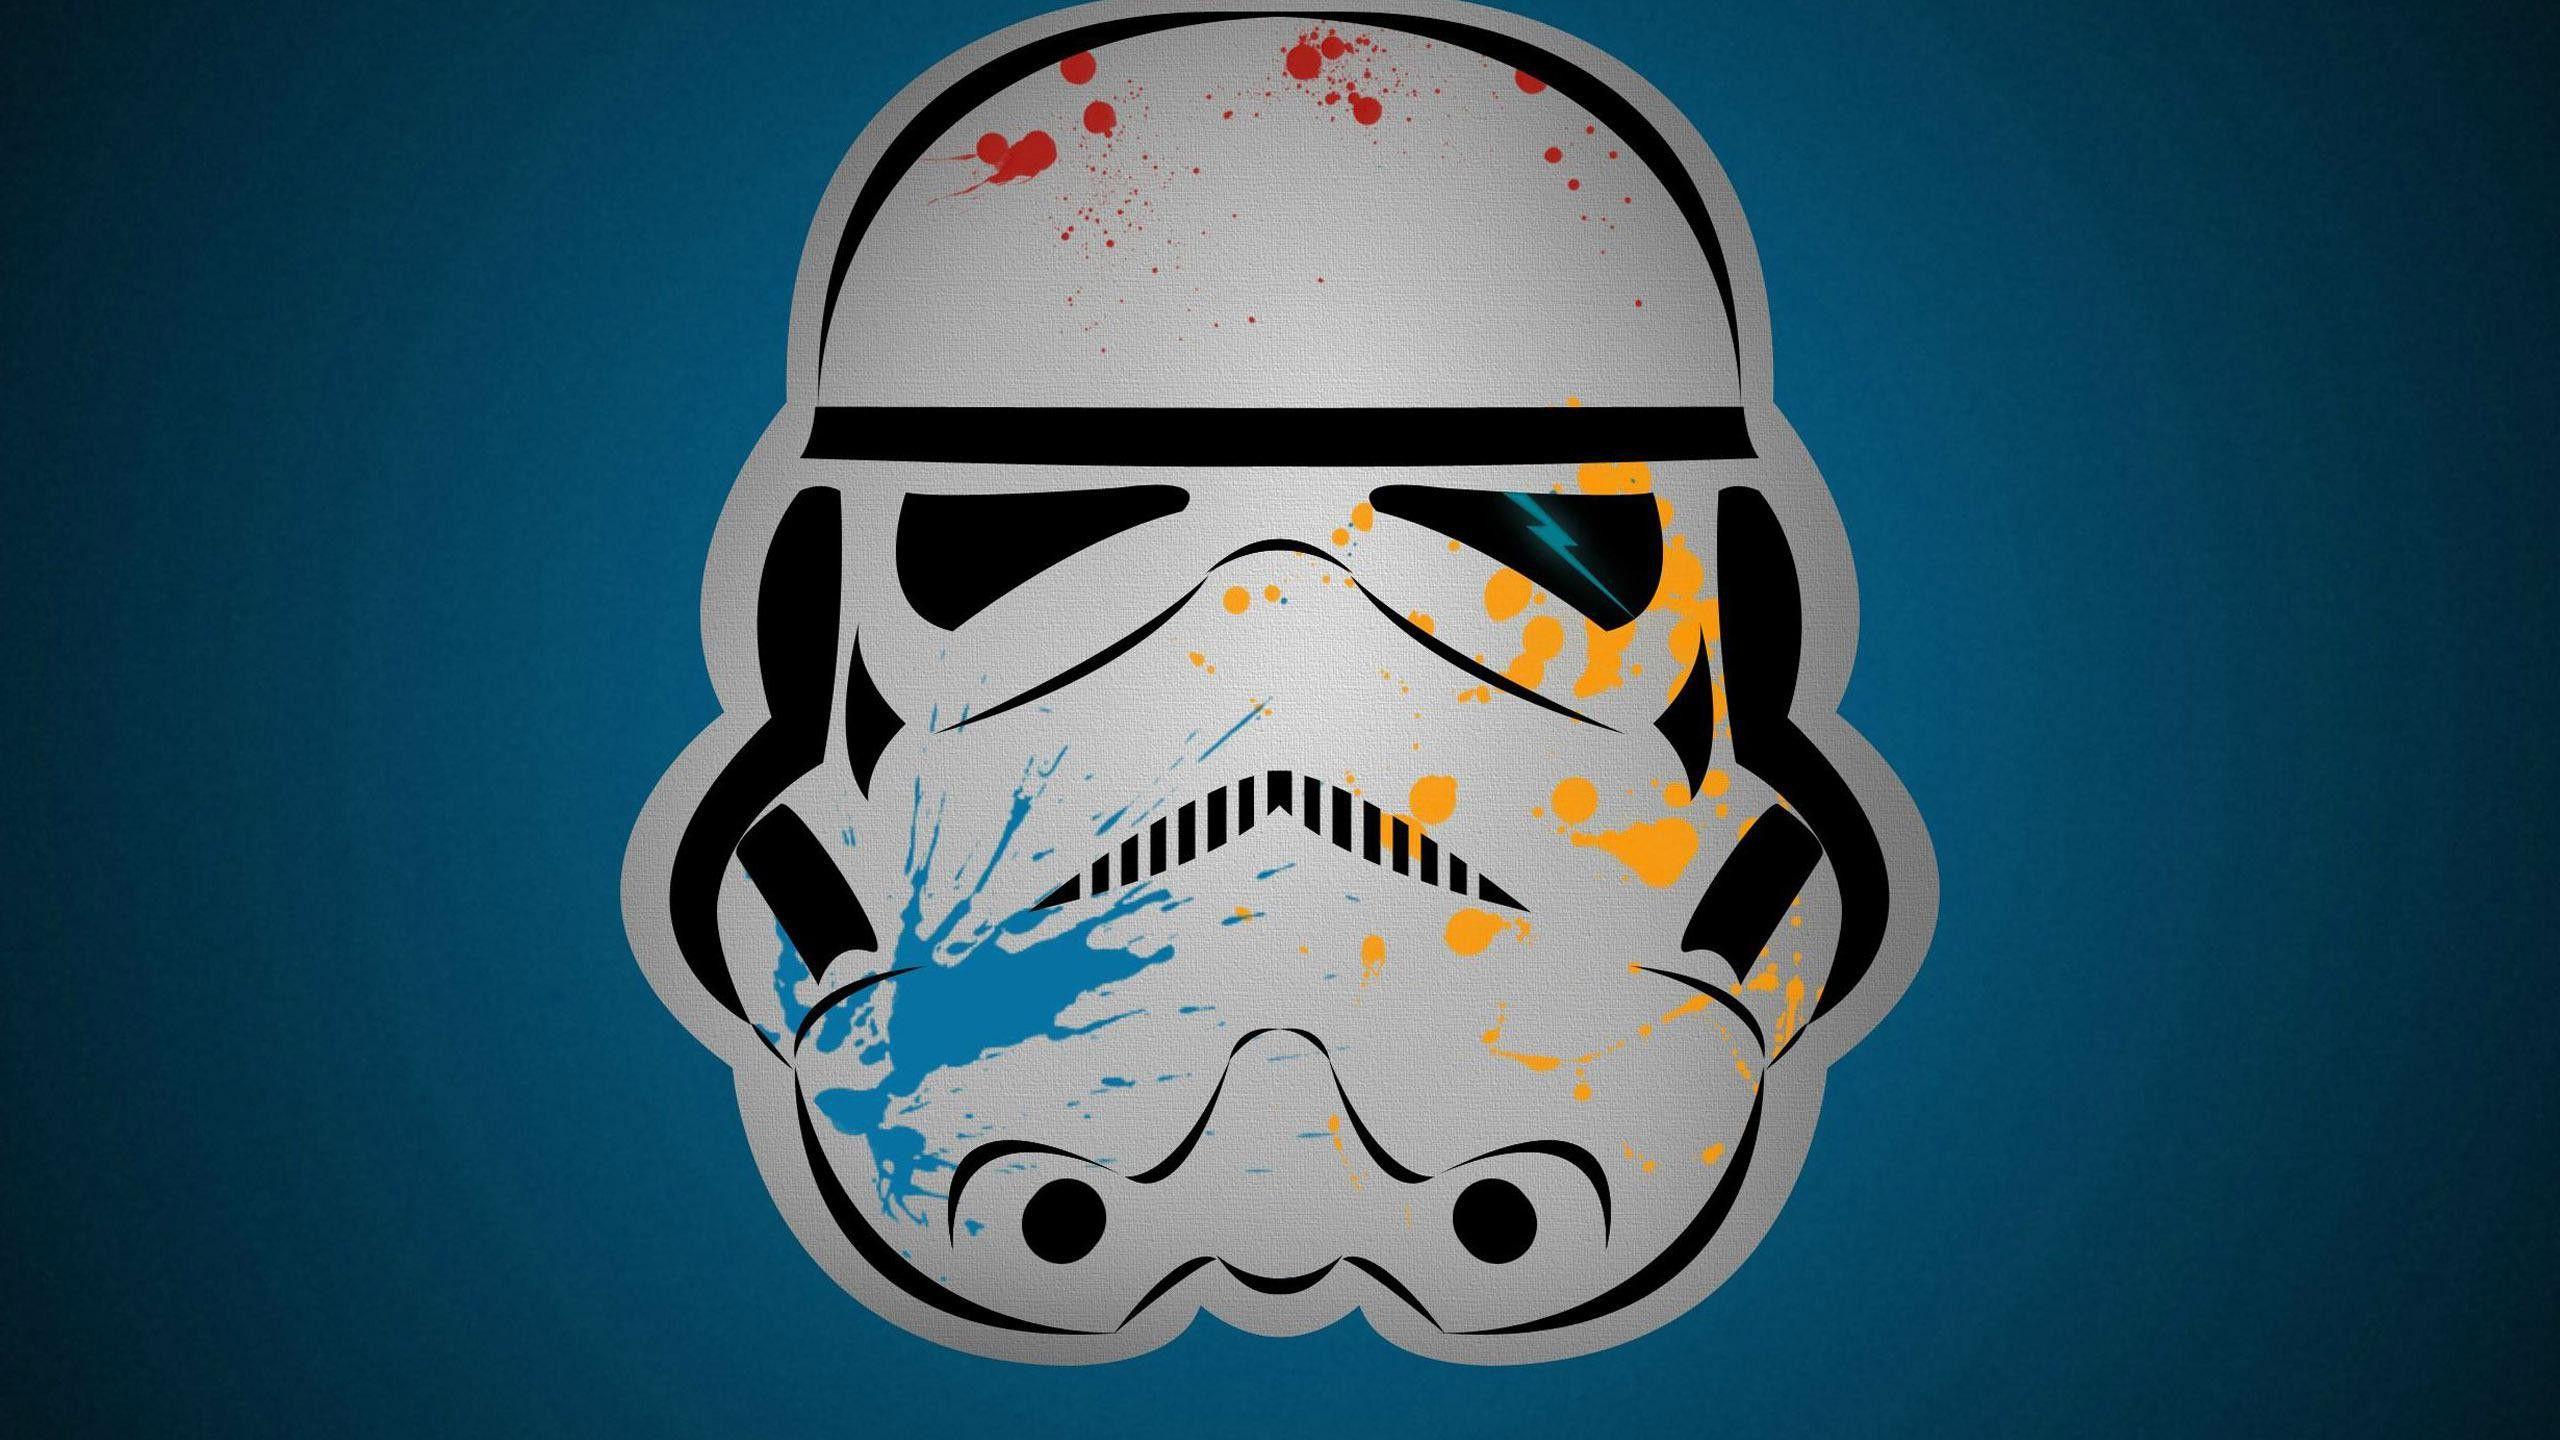 Stormtrooper Wars free desktop background and wallpaper